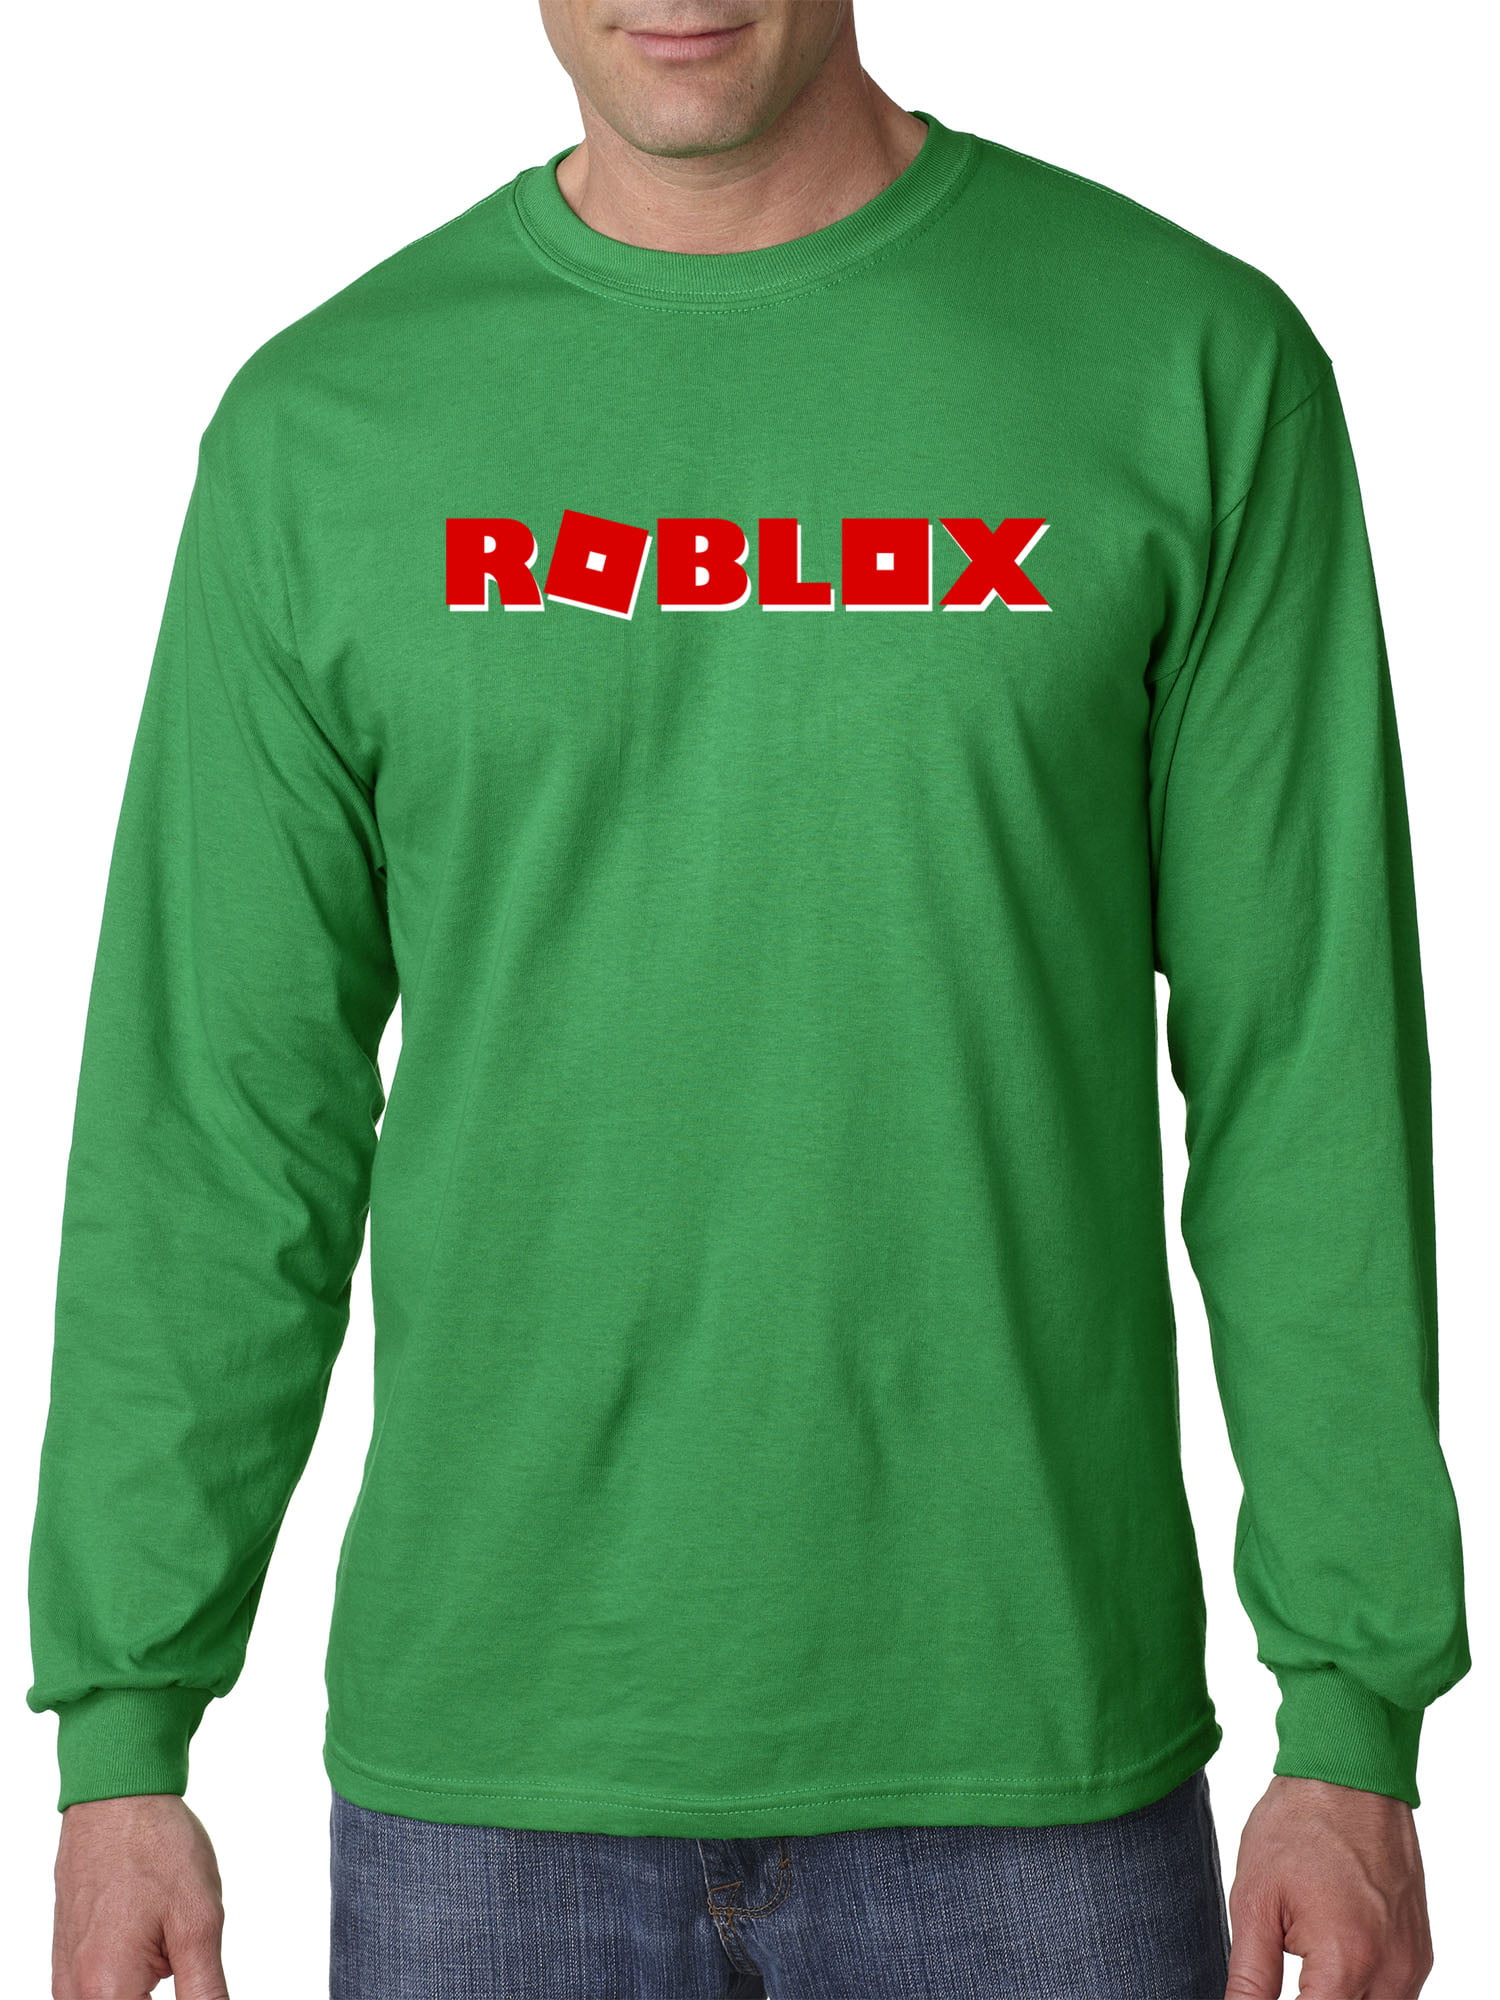 New Way New Way 922 Unisex Long Sleeve T Shirt Roblox Logo Game Filled Medium Kelly Green Walmart Com Walmart Com - roblox t shirt green jersey